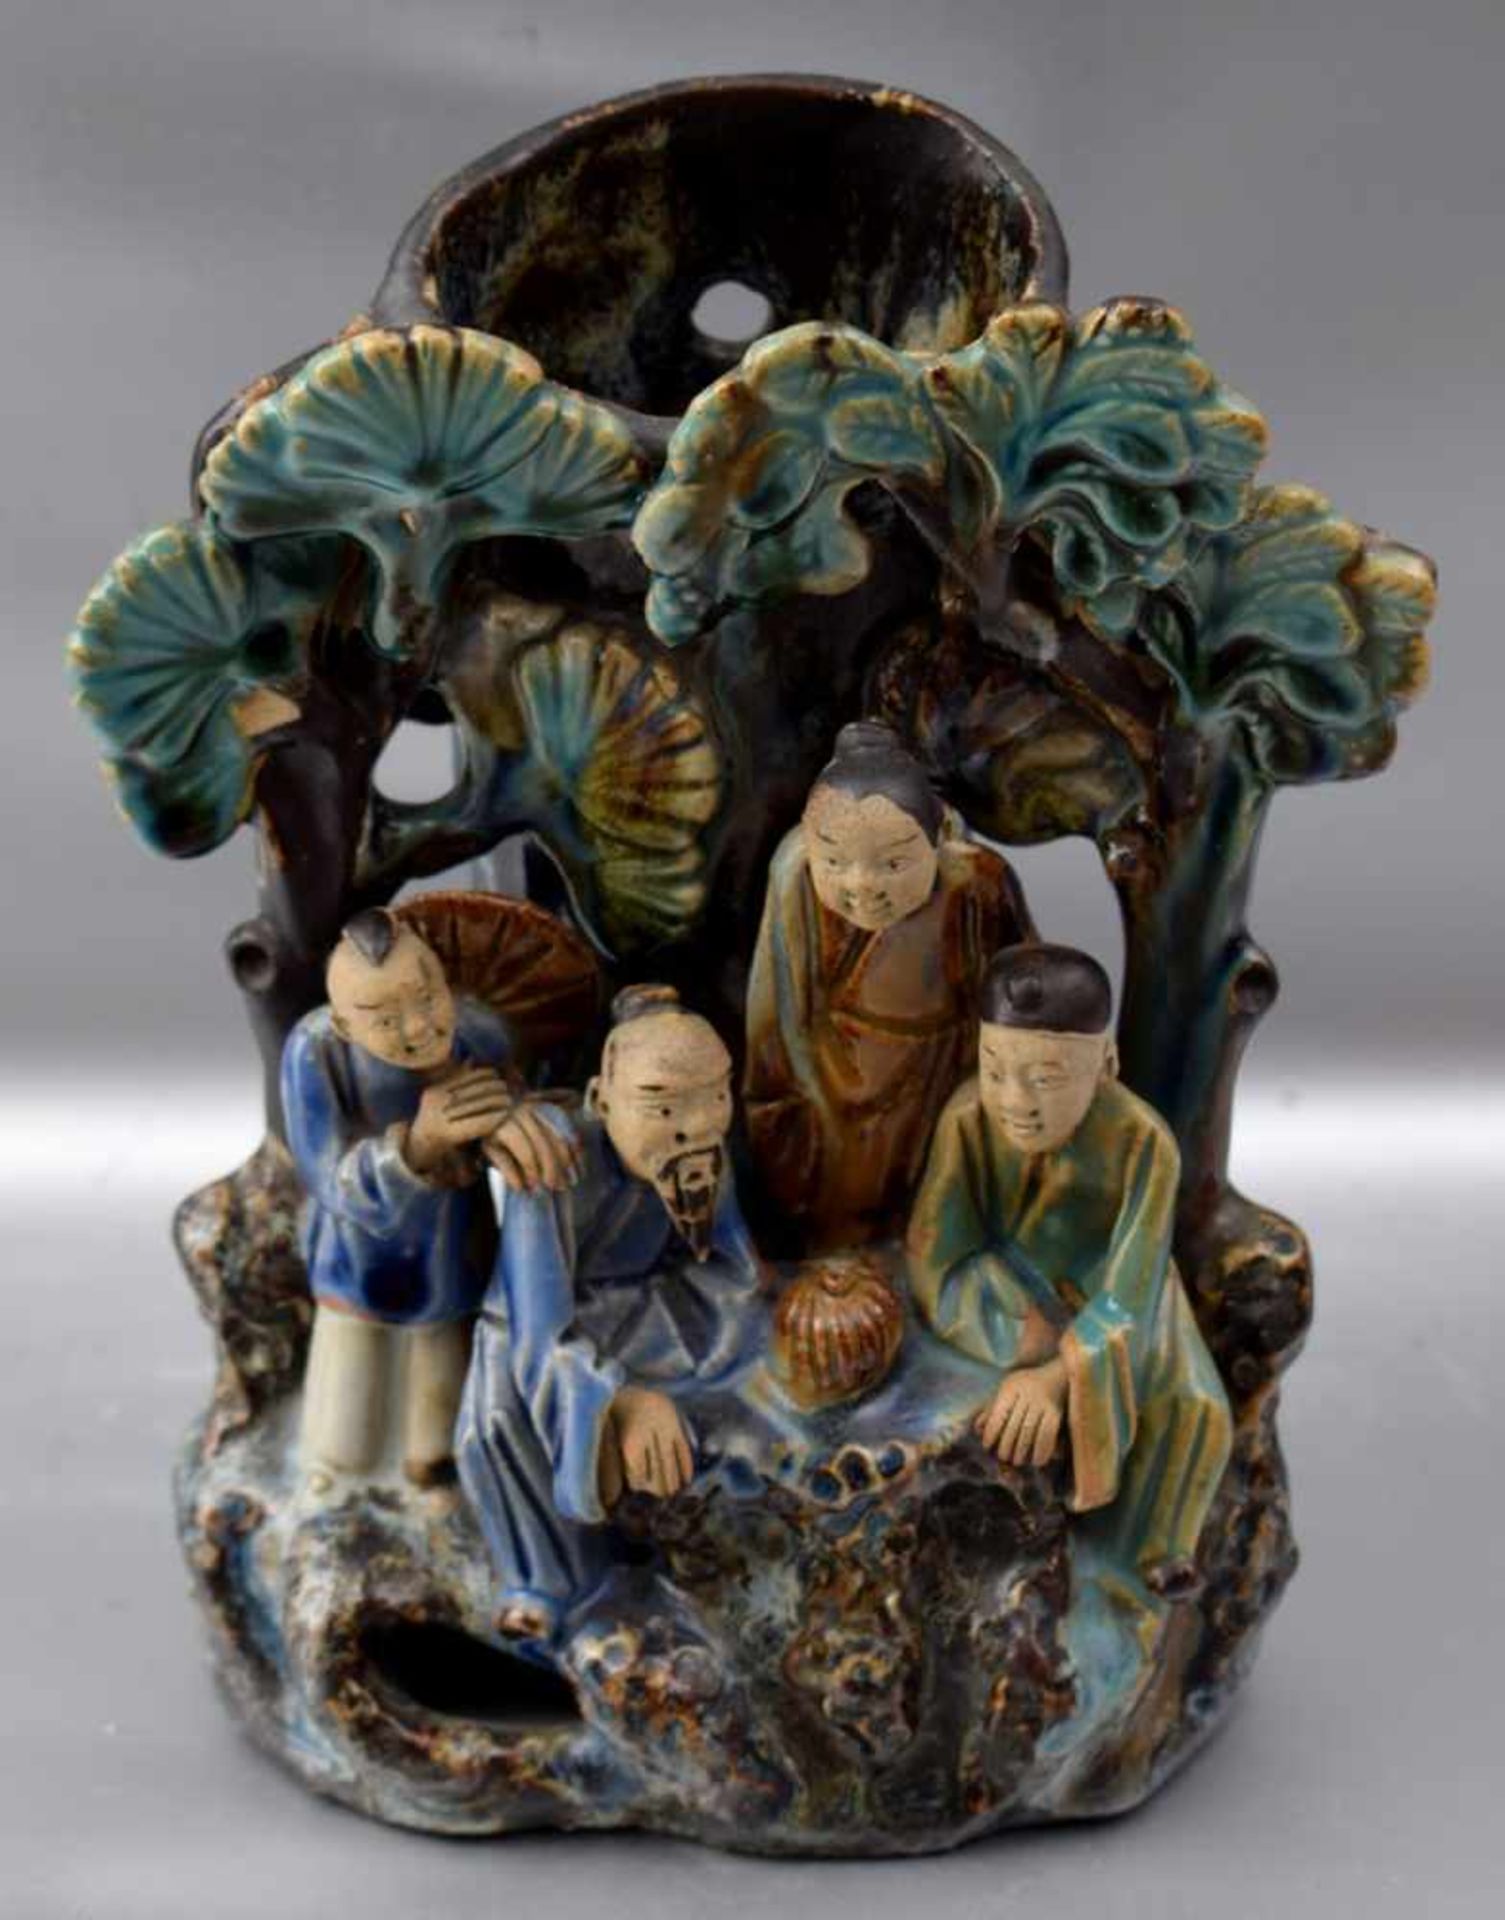 Ziervase Keramik, mit vier Asiaten plastisch verziert, bunt bemalt, H 19 cm, besch.